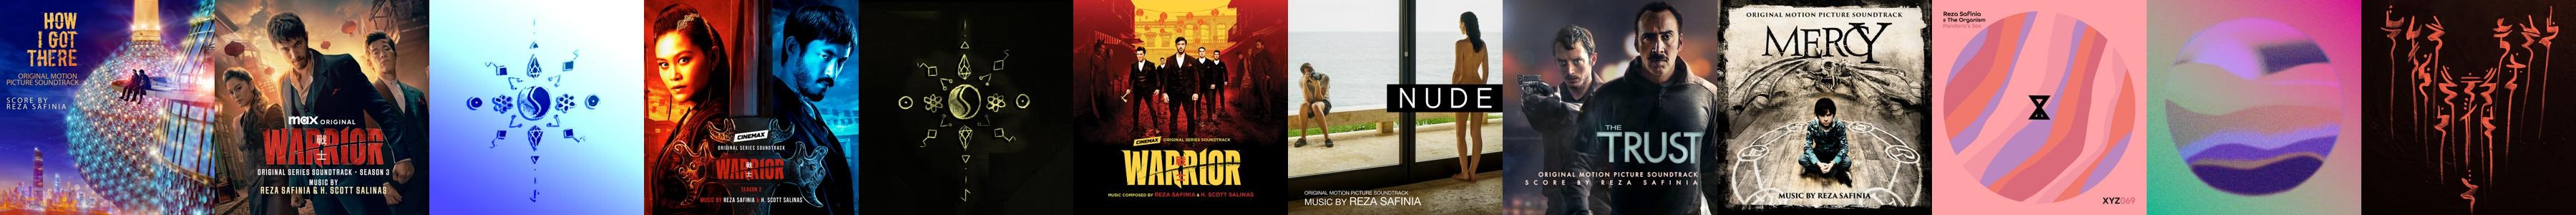 Warrior (Cinemax Original Series Soundtrack) - Album by Reza